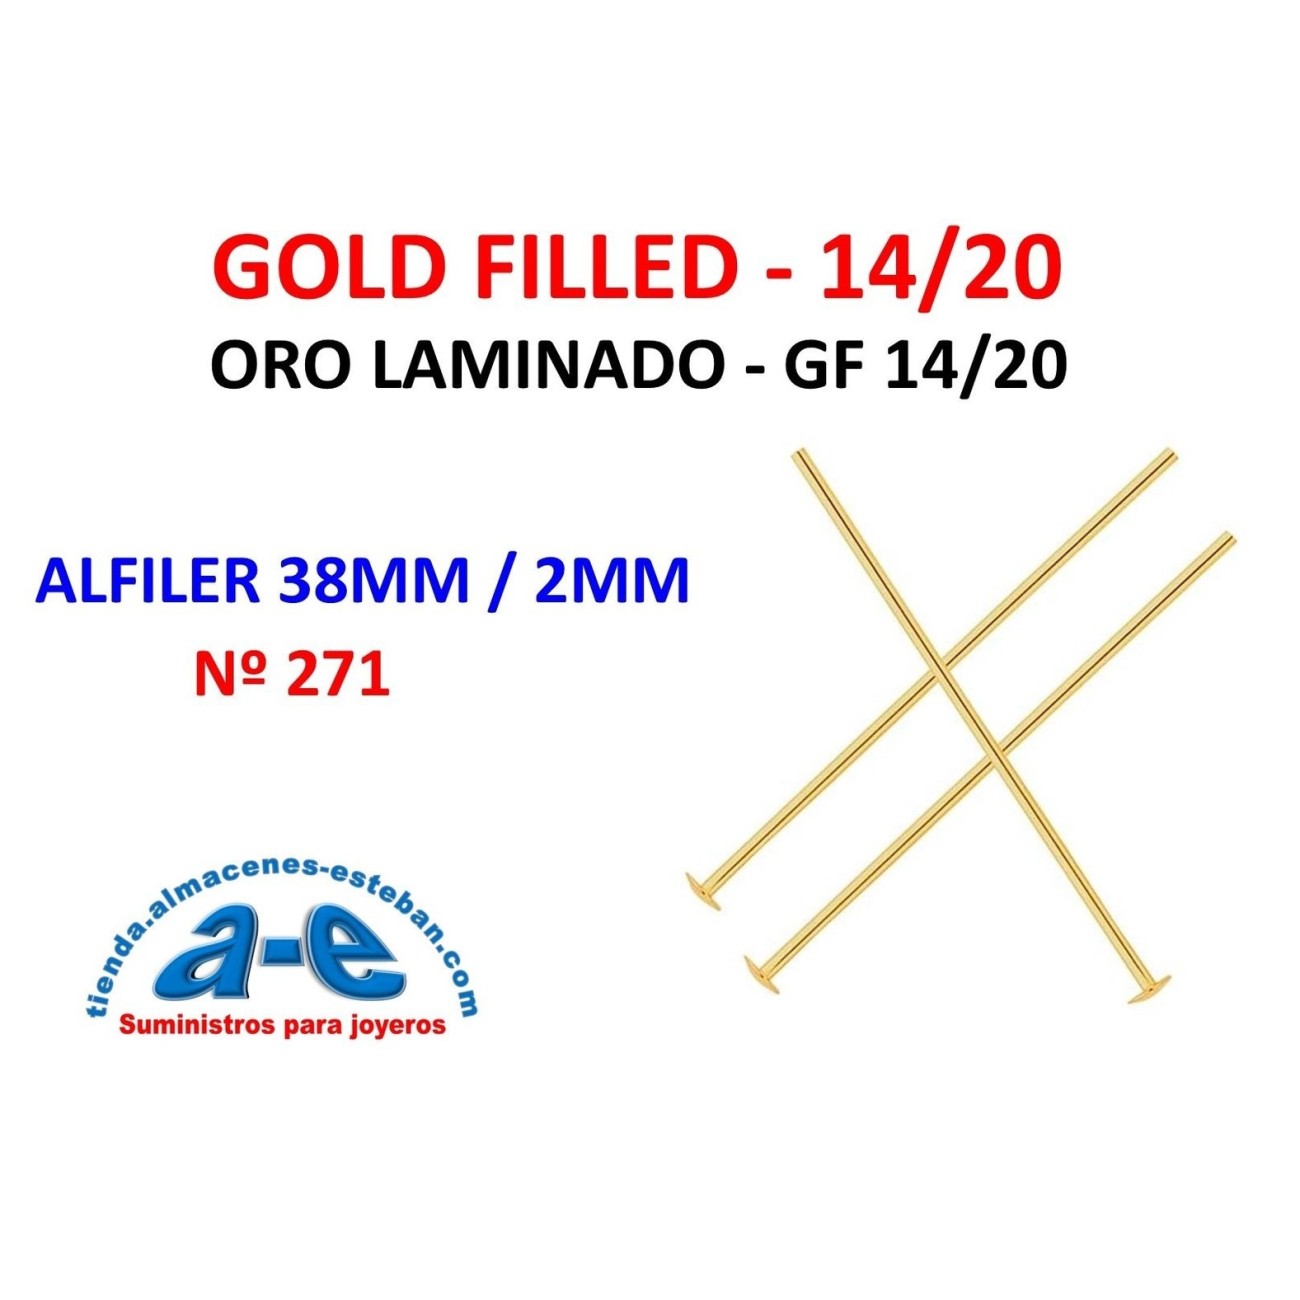 GOLD FILLED ALFILER 38MM/2MM 271 (UN)